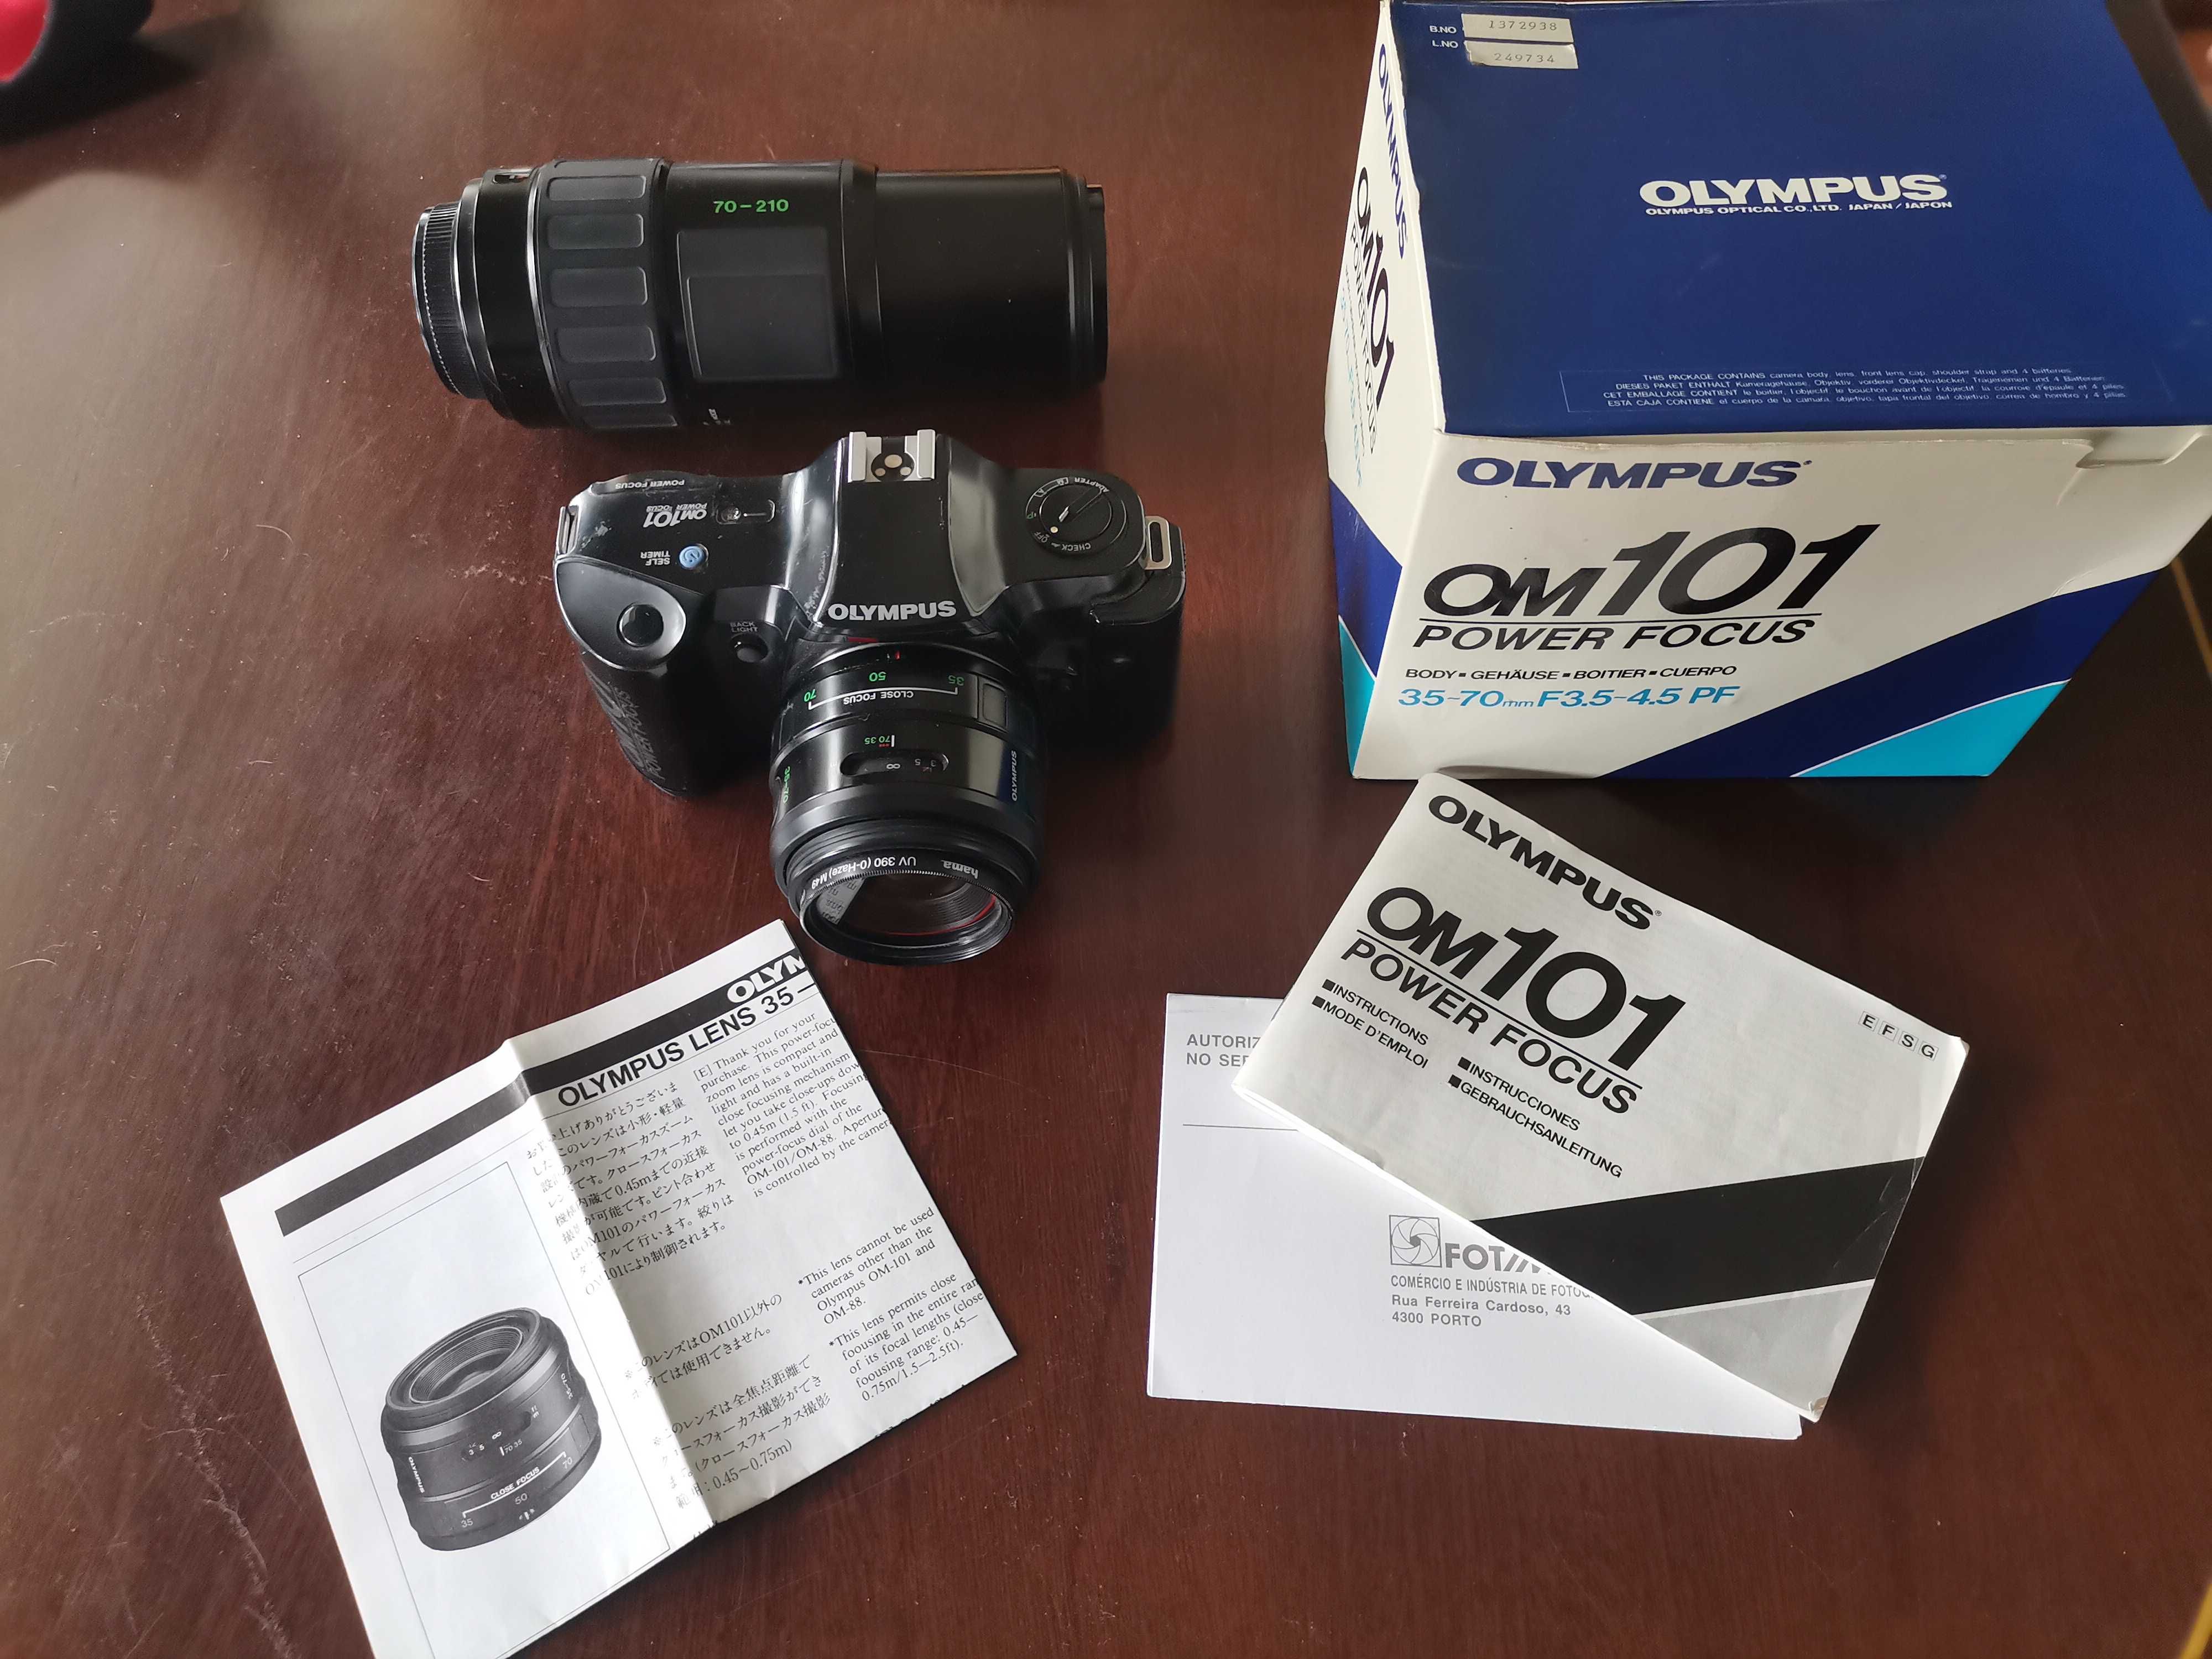 Camera fotográfica Olympus OM-101 - Power Focus - c/ lente 35-70mm